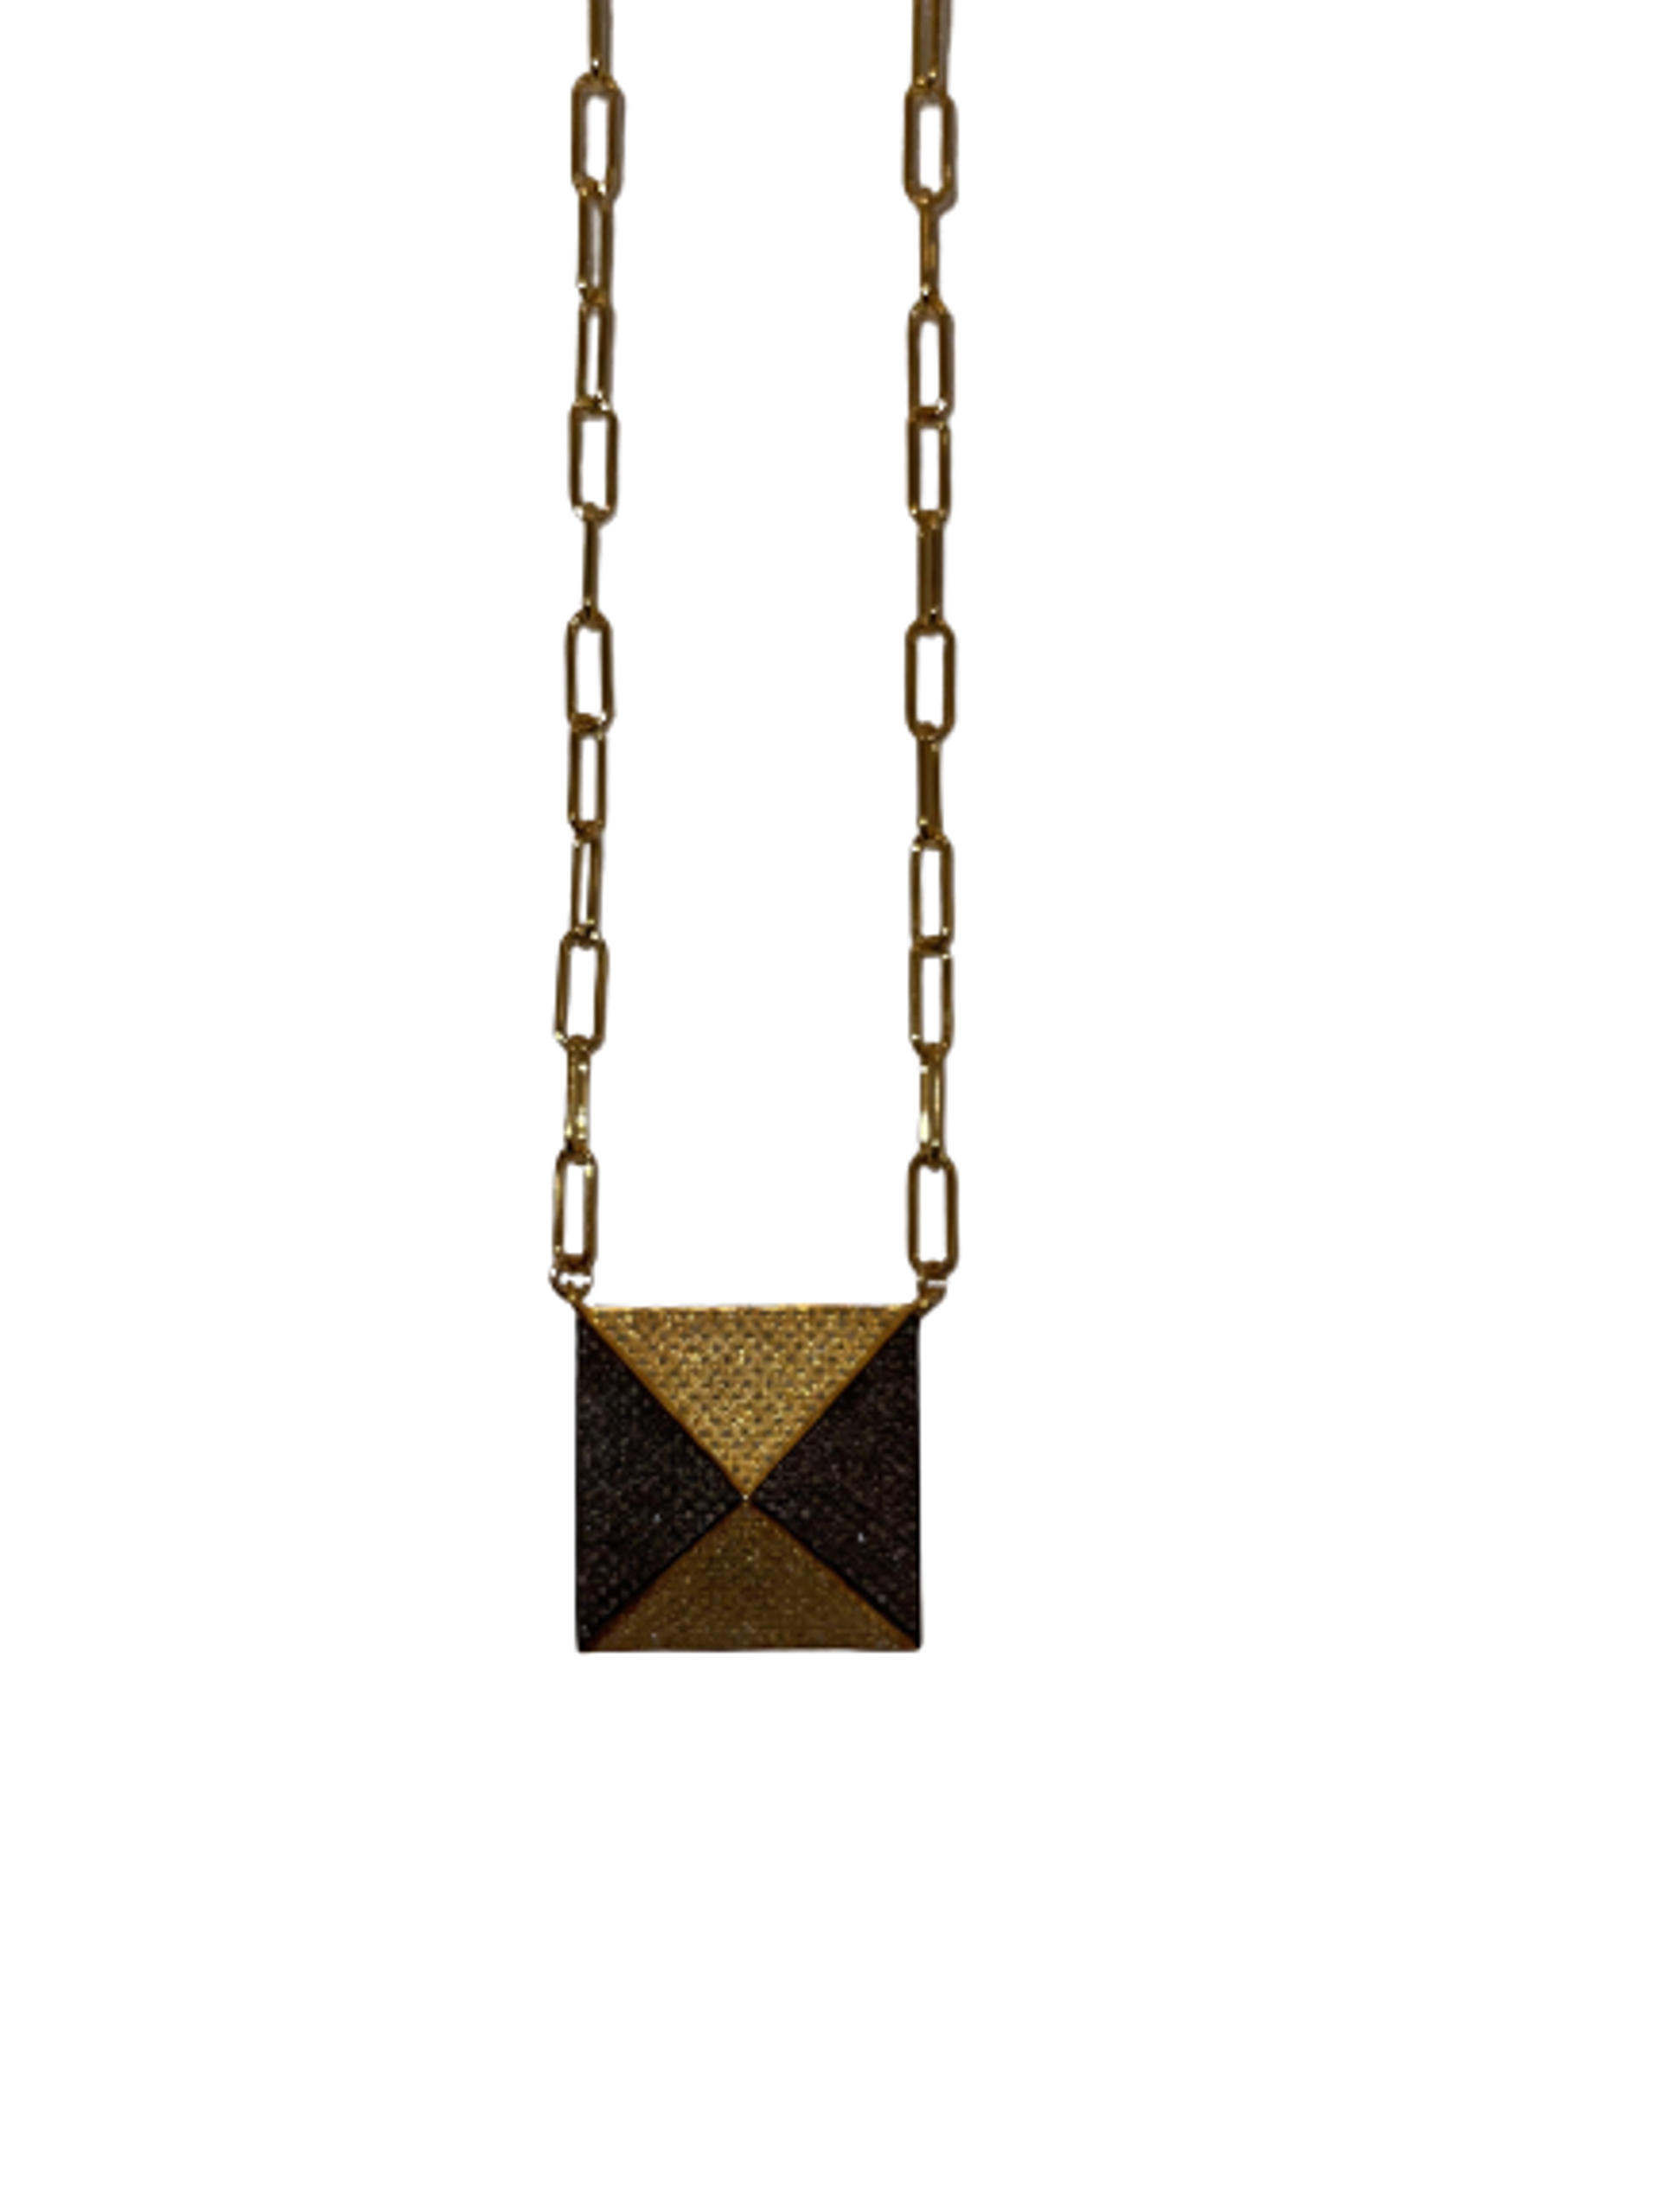 Gold Vermeil Paper Clip Chain Necklace with Square Diamond Two-Tone Pendant by Karen Birchmier